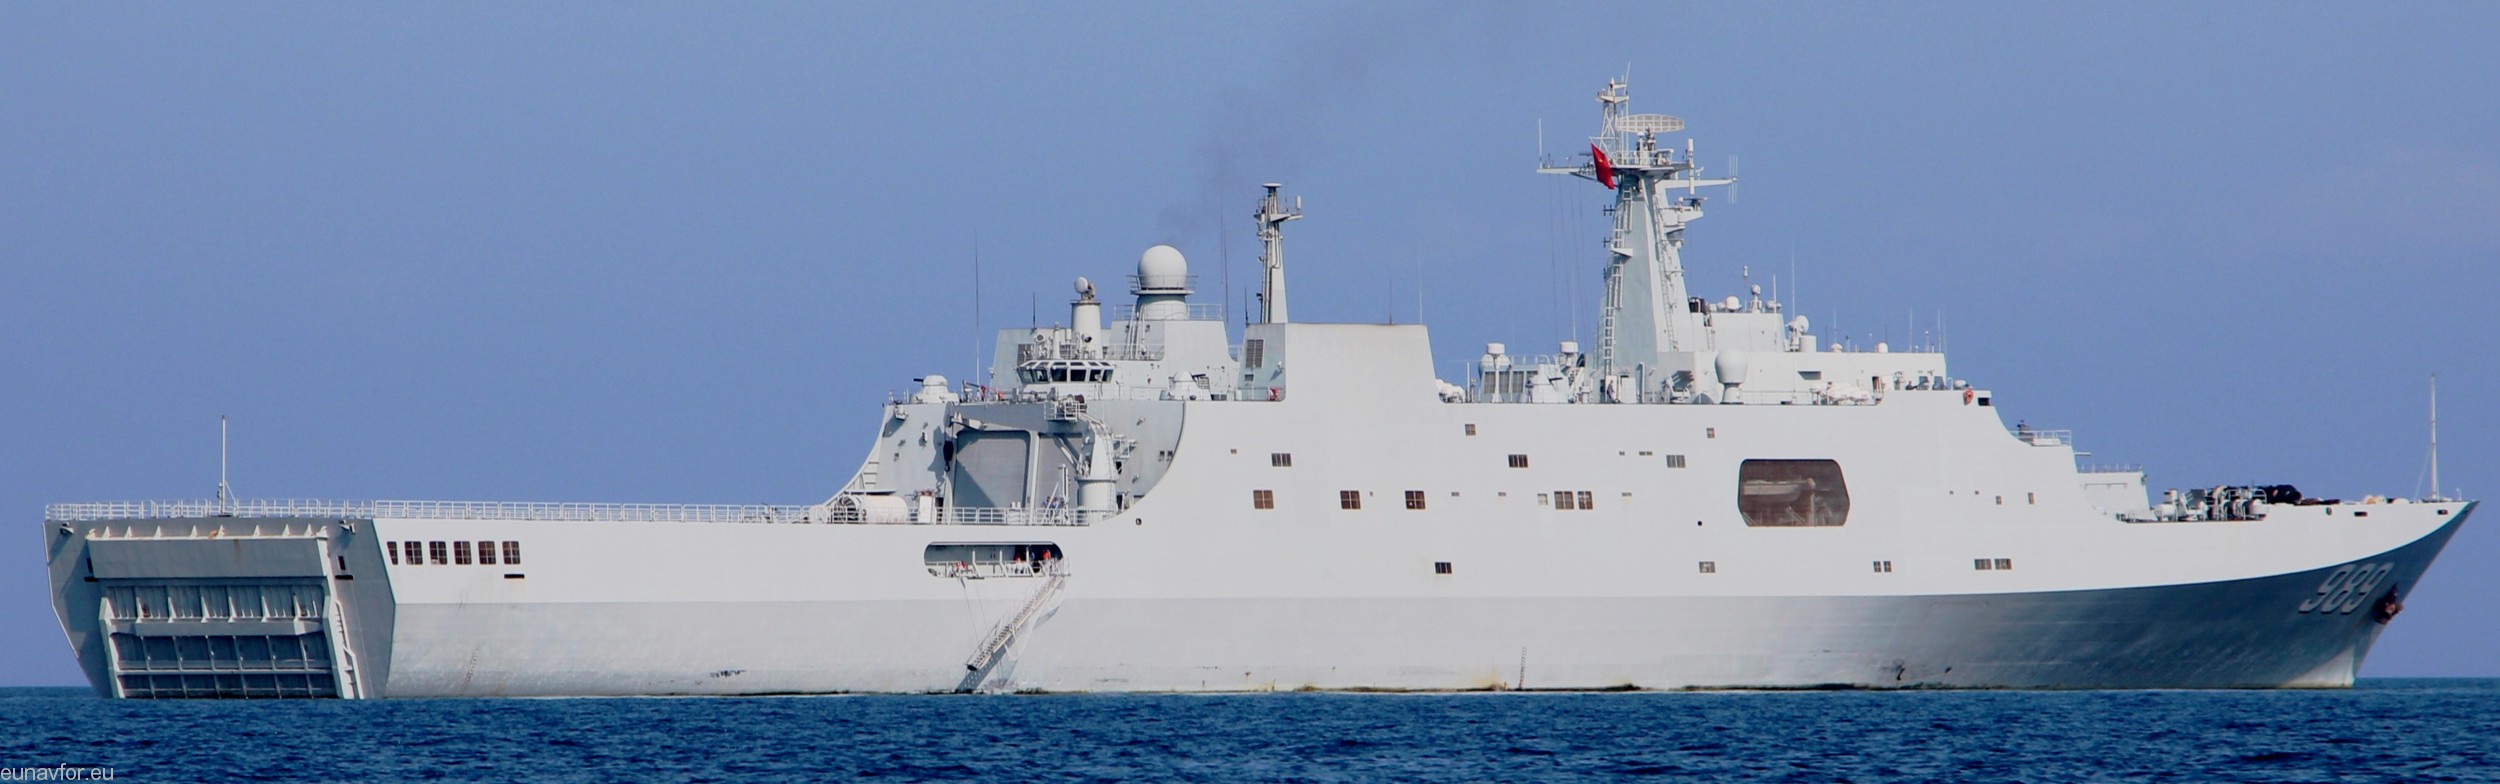 lsd-989 plans changbai shan type 071 yuzhao class landing ship dock lsd amphibious transport china people's liberation army navy 02